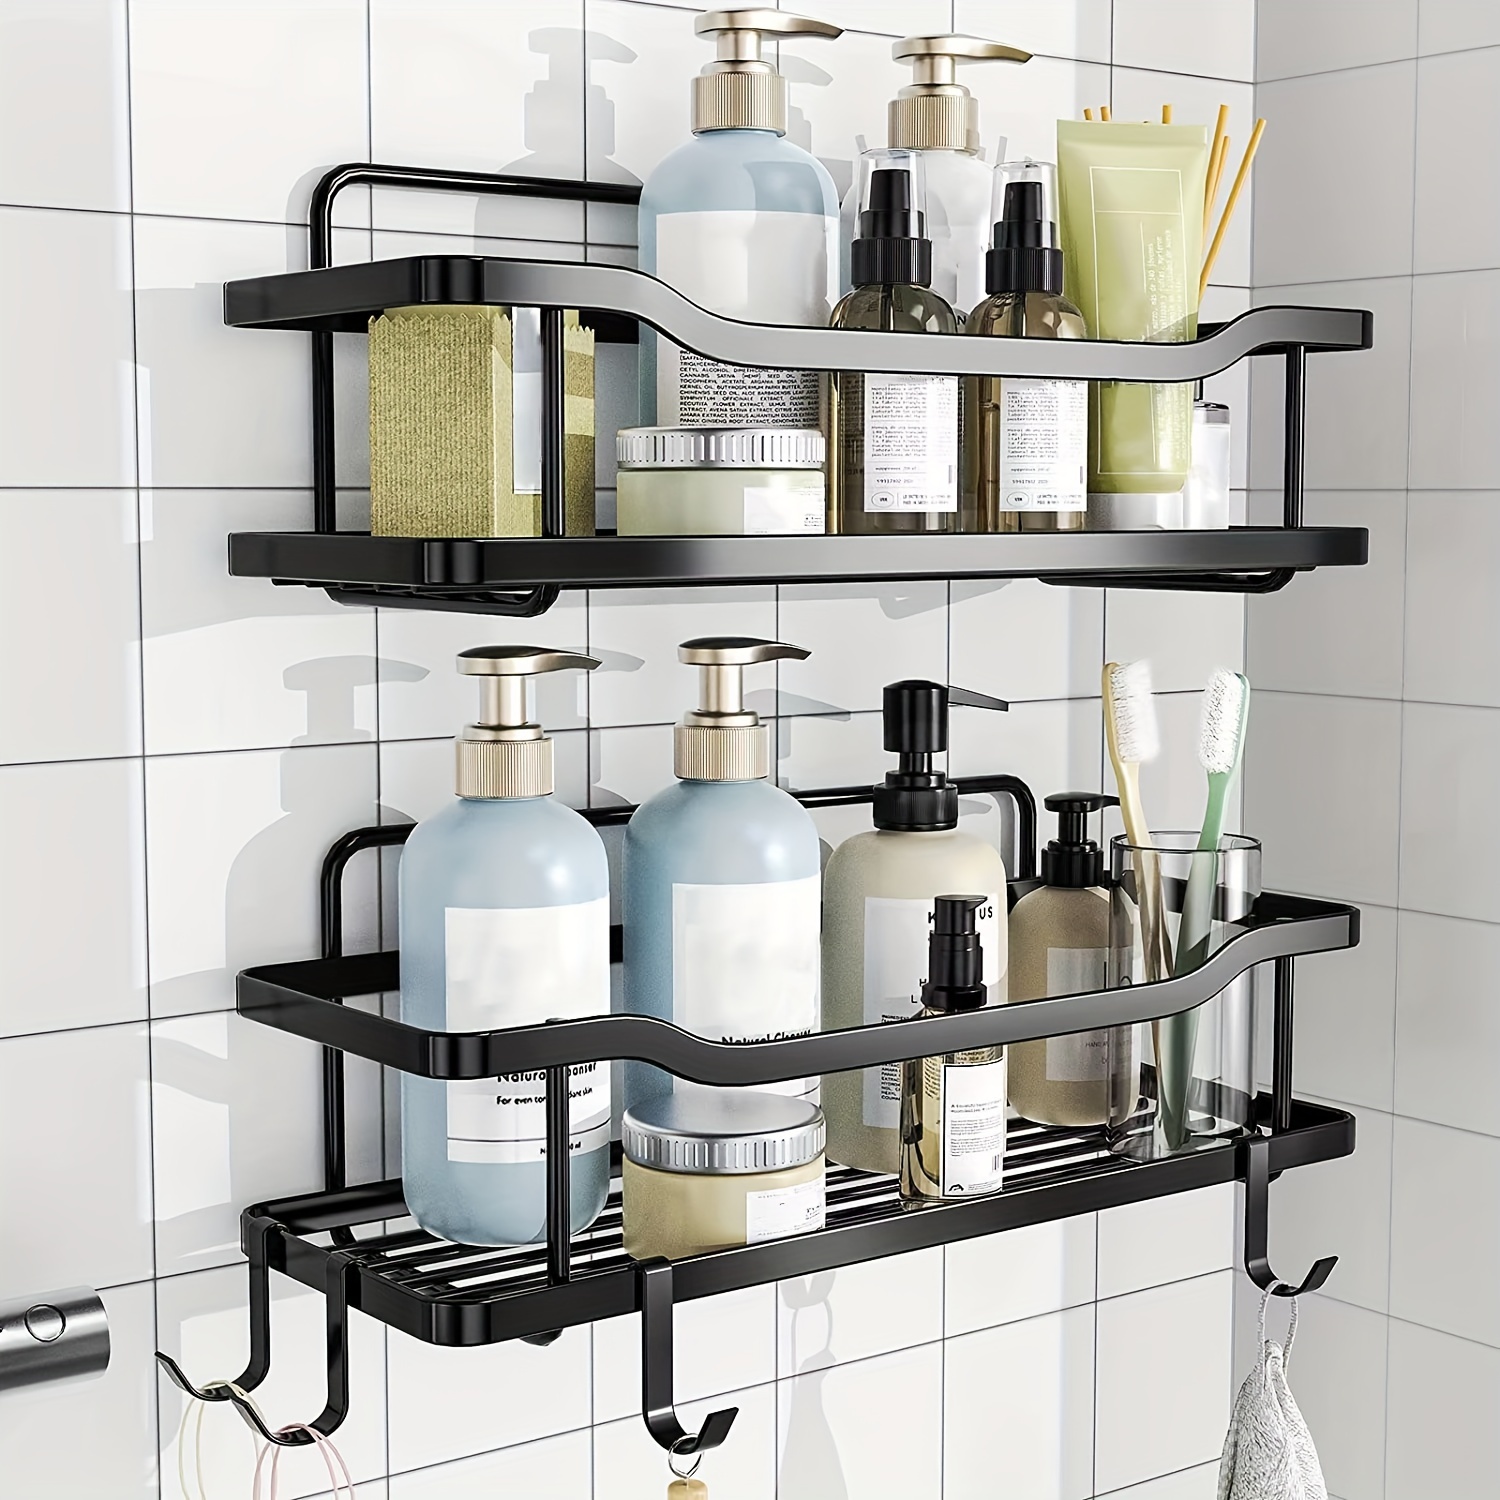 Rotating Shower Caddy | Adhesive Shower Shelf for Inside Shower & Kitchen -  White & Grey